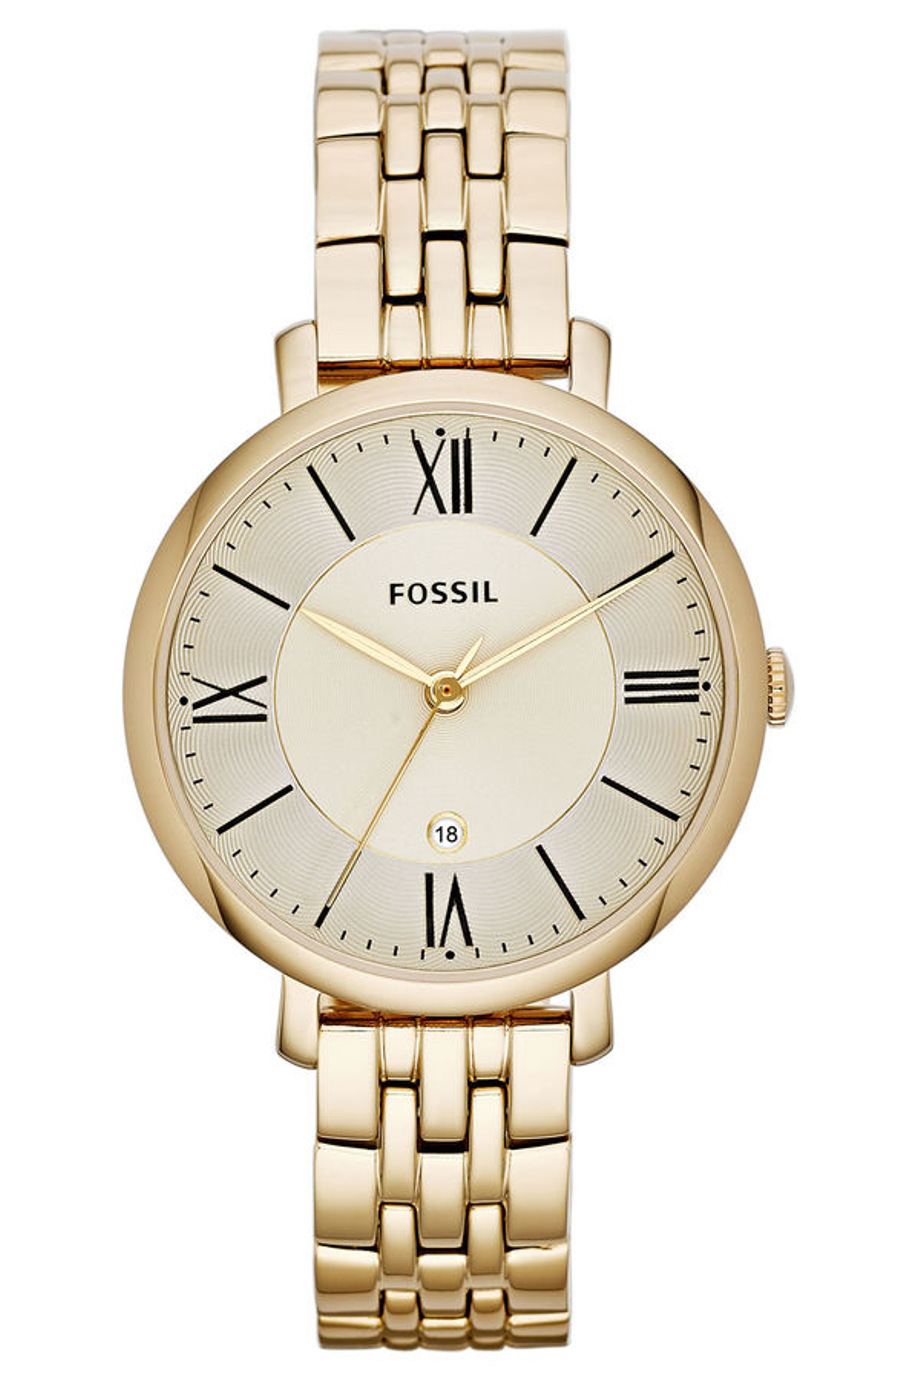 Fossil | ES3434 Gold Watch | Myer Online